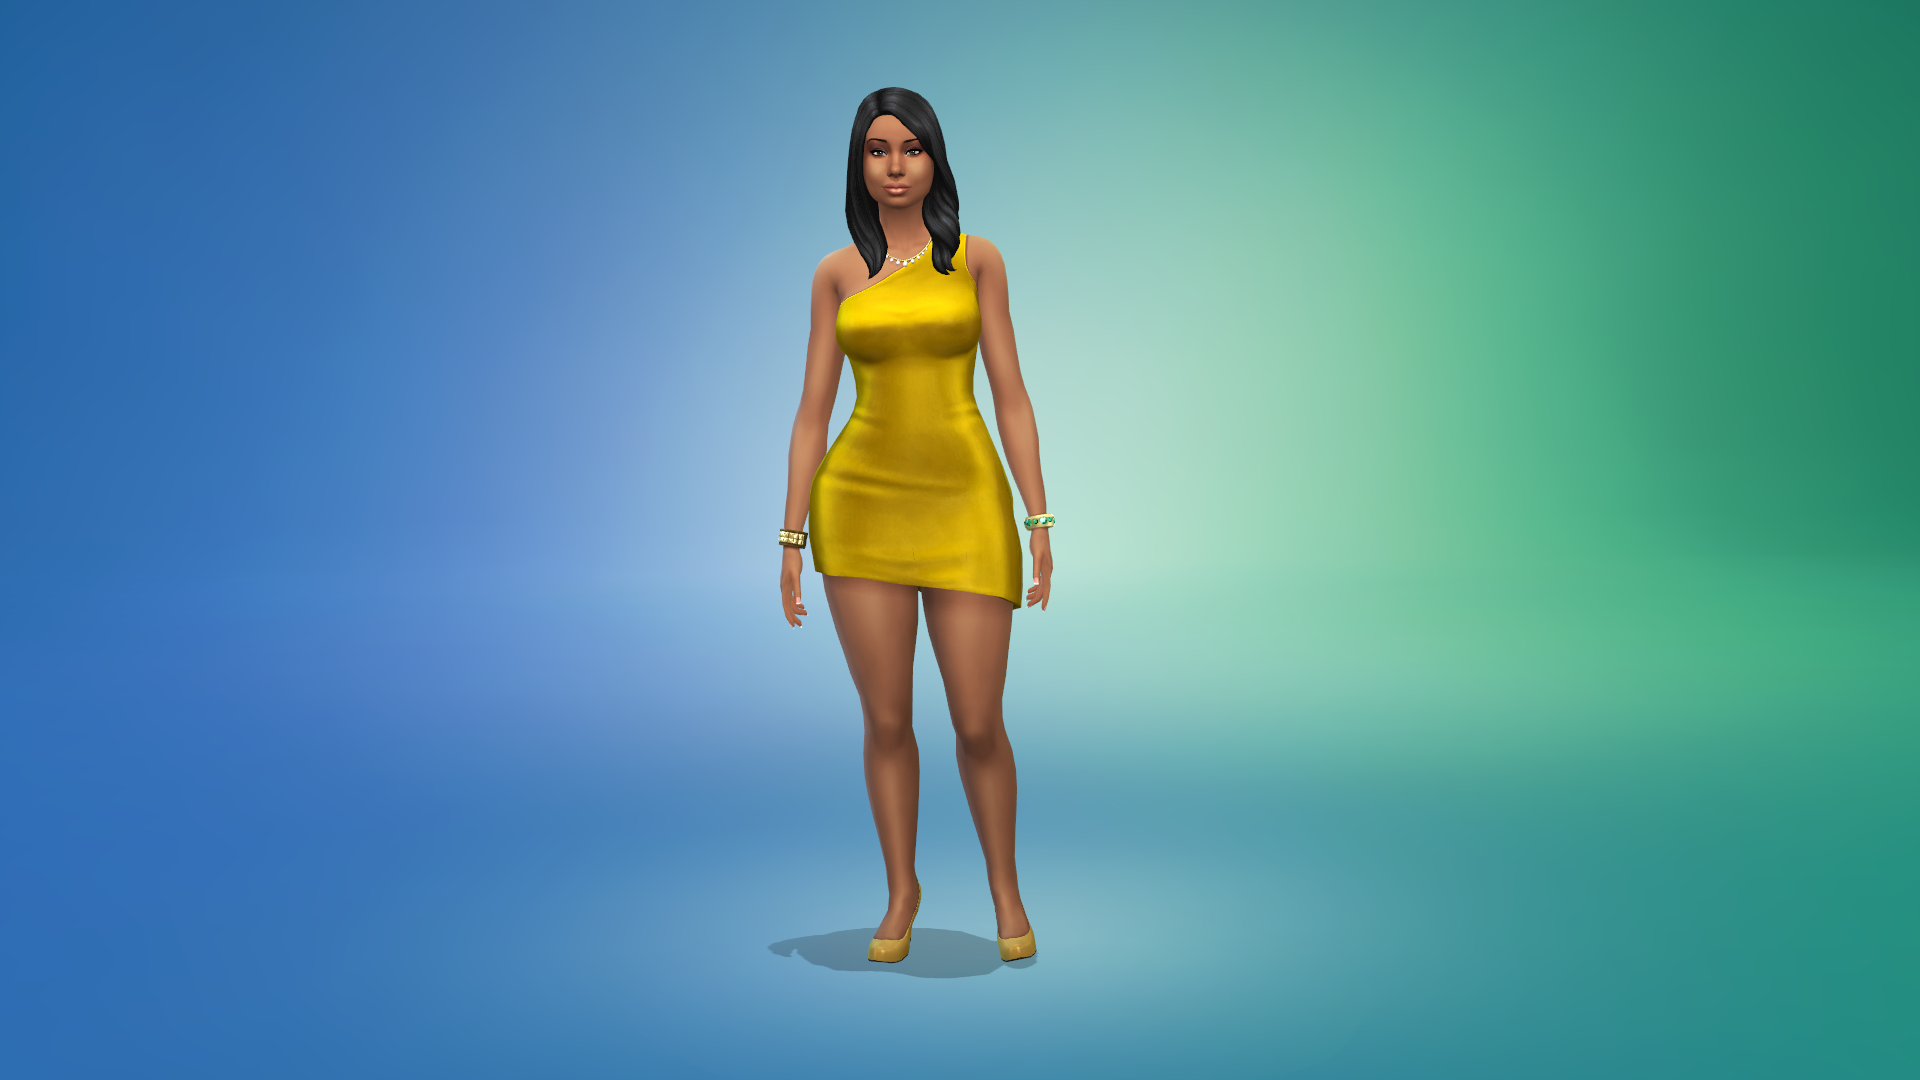 CC-Free Sims 4 Beyonce & Meg The Stallion Free Sims Download - Downloads -  CAS Sims - LoversLab